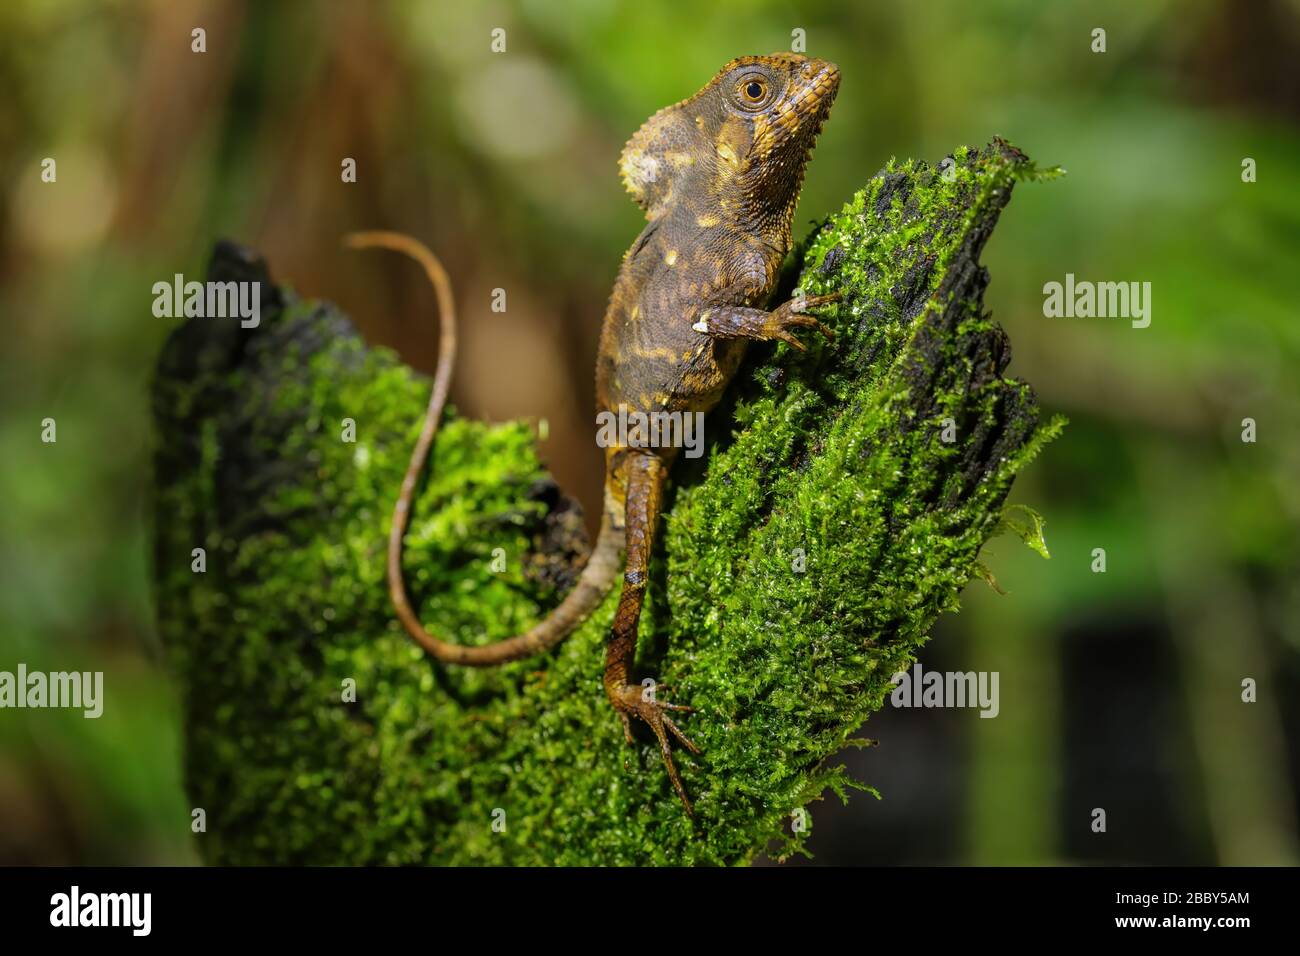 Female smooth helmeted iguana (Corytophanes cristatus) sitting on a stump, Costa Rica Stock Photo